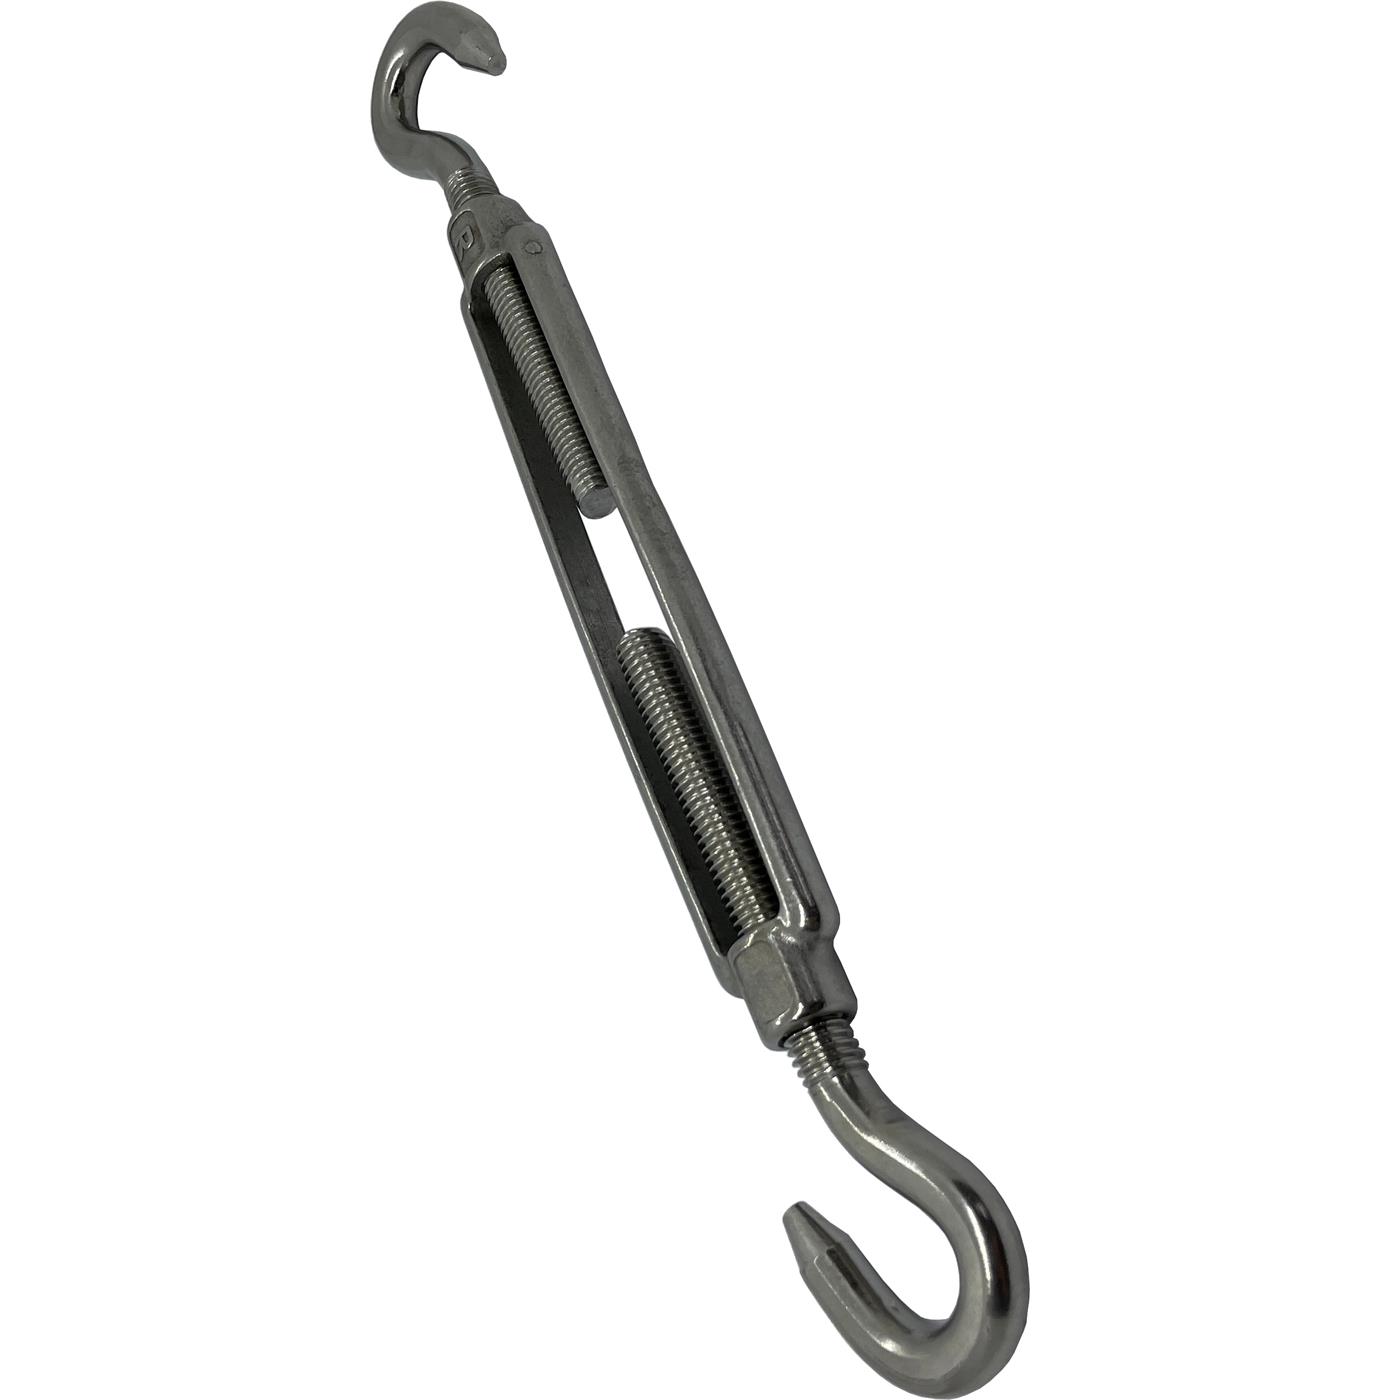 Rope tensioner Hook-Hook Stainless steel V4A 316 M4 Turnbuckle Shroud clamp